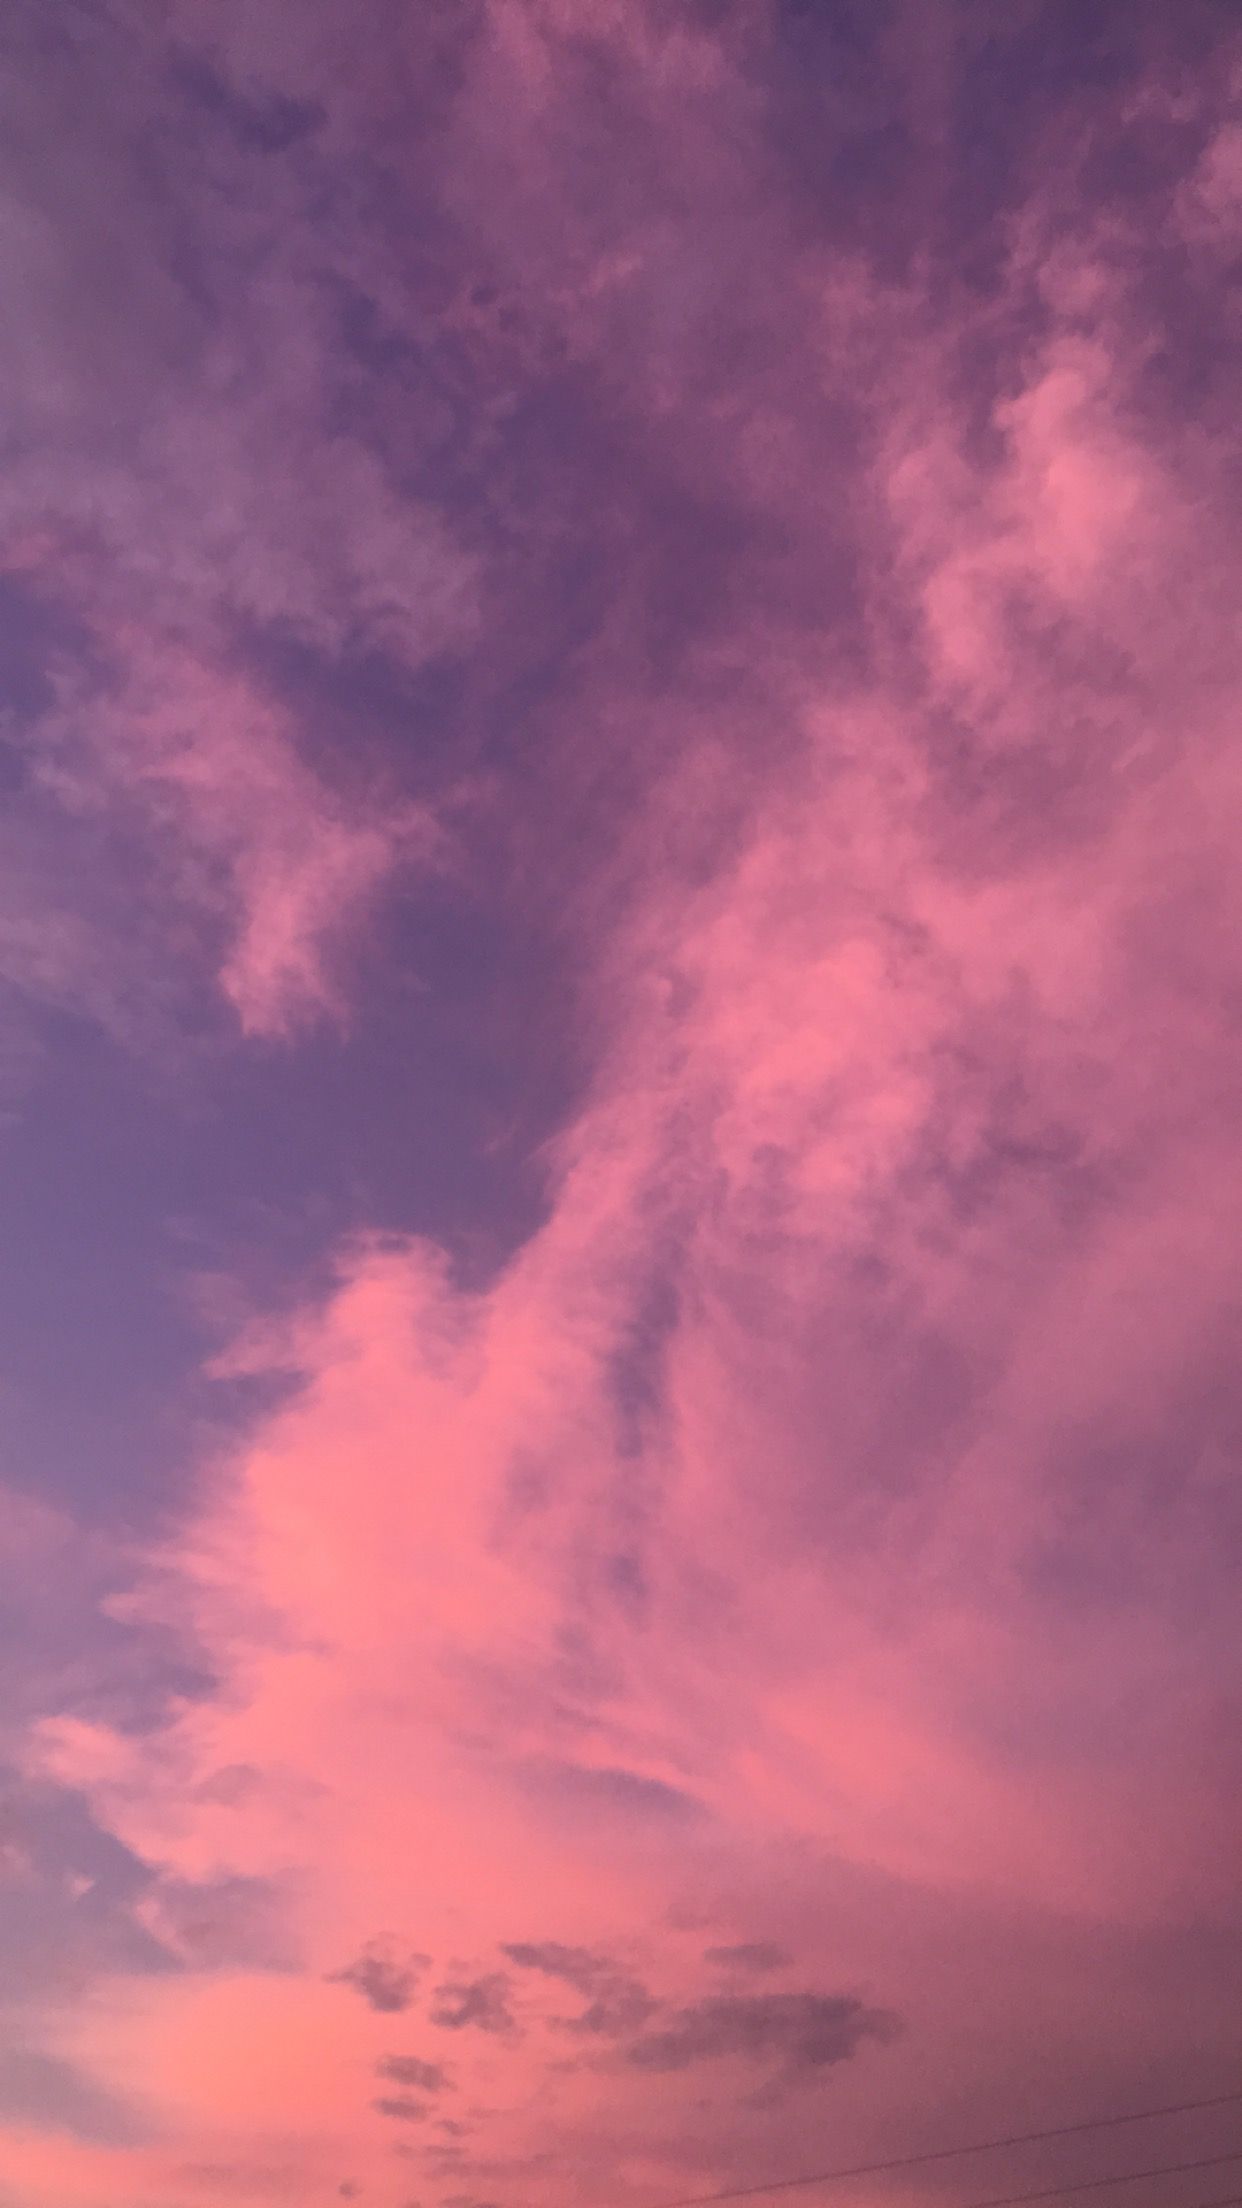 iPhone Wallpaper. Sky, Cloud, Pink, Daytime, Red, Purple